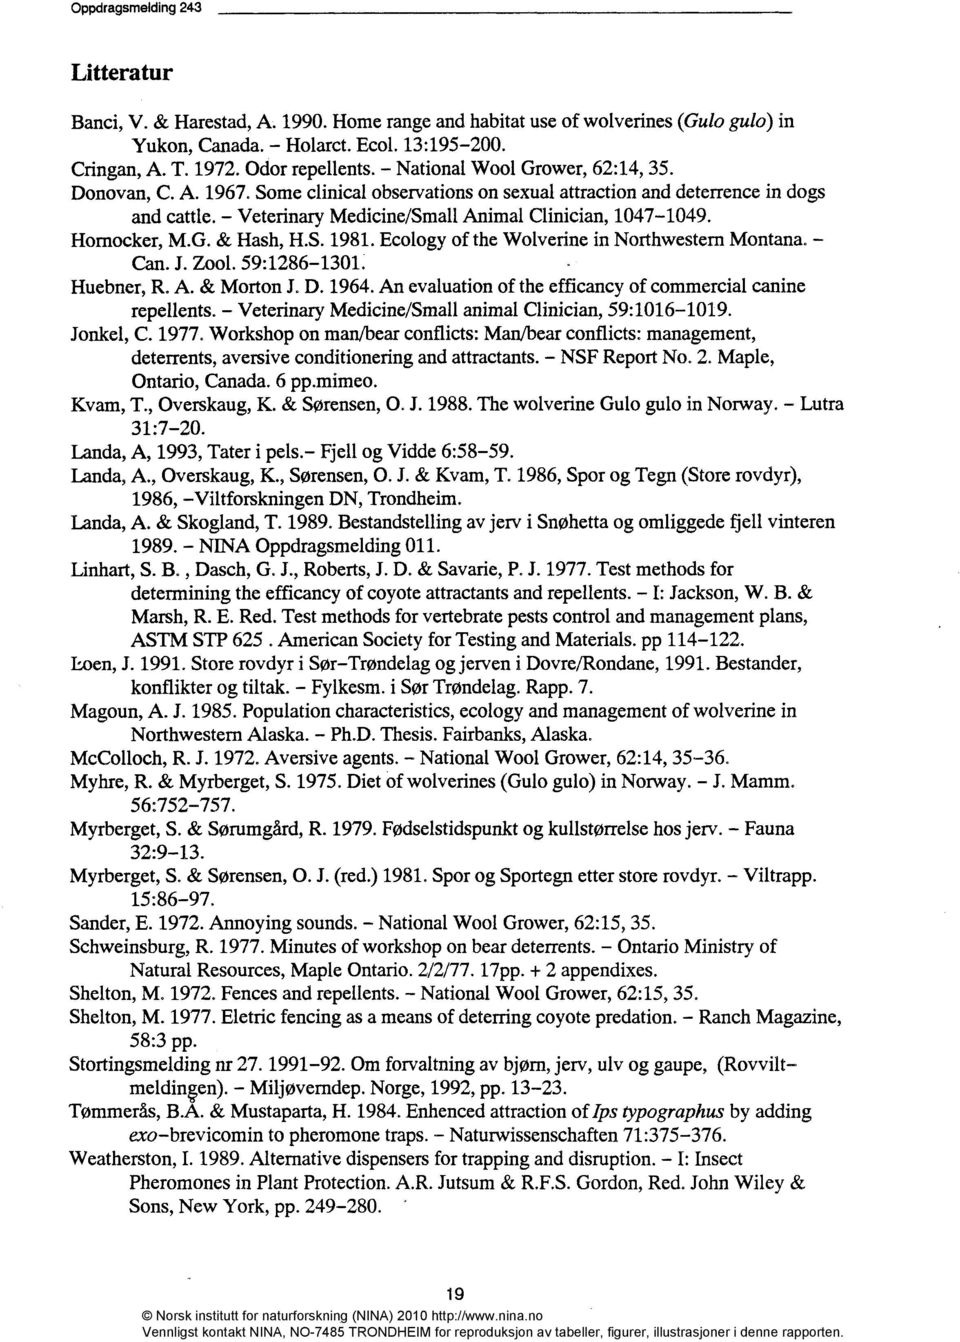 Hornocker, M.G. & Hash, H.S. 1981. Ecology of the Wolverine in Northwestem Montana. - Can. J. Zool. 59:1286-1301. Huebner, R. A. & Morton J. D. 1964.